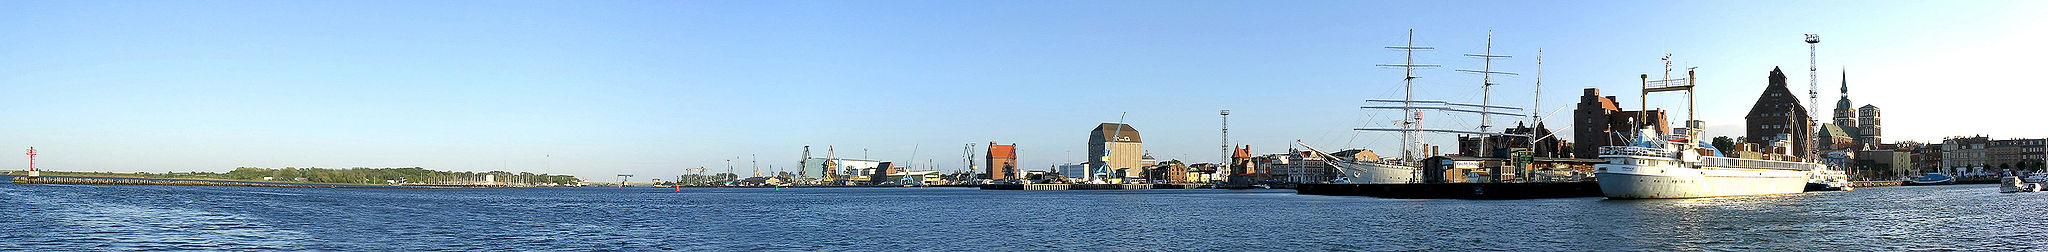 Panorama des Hafens